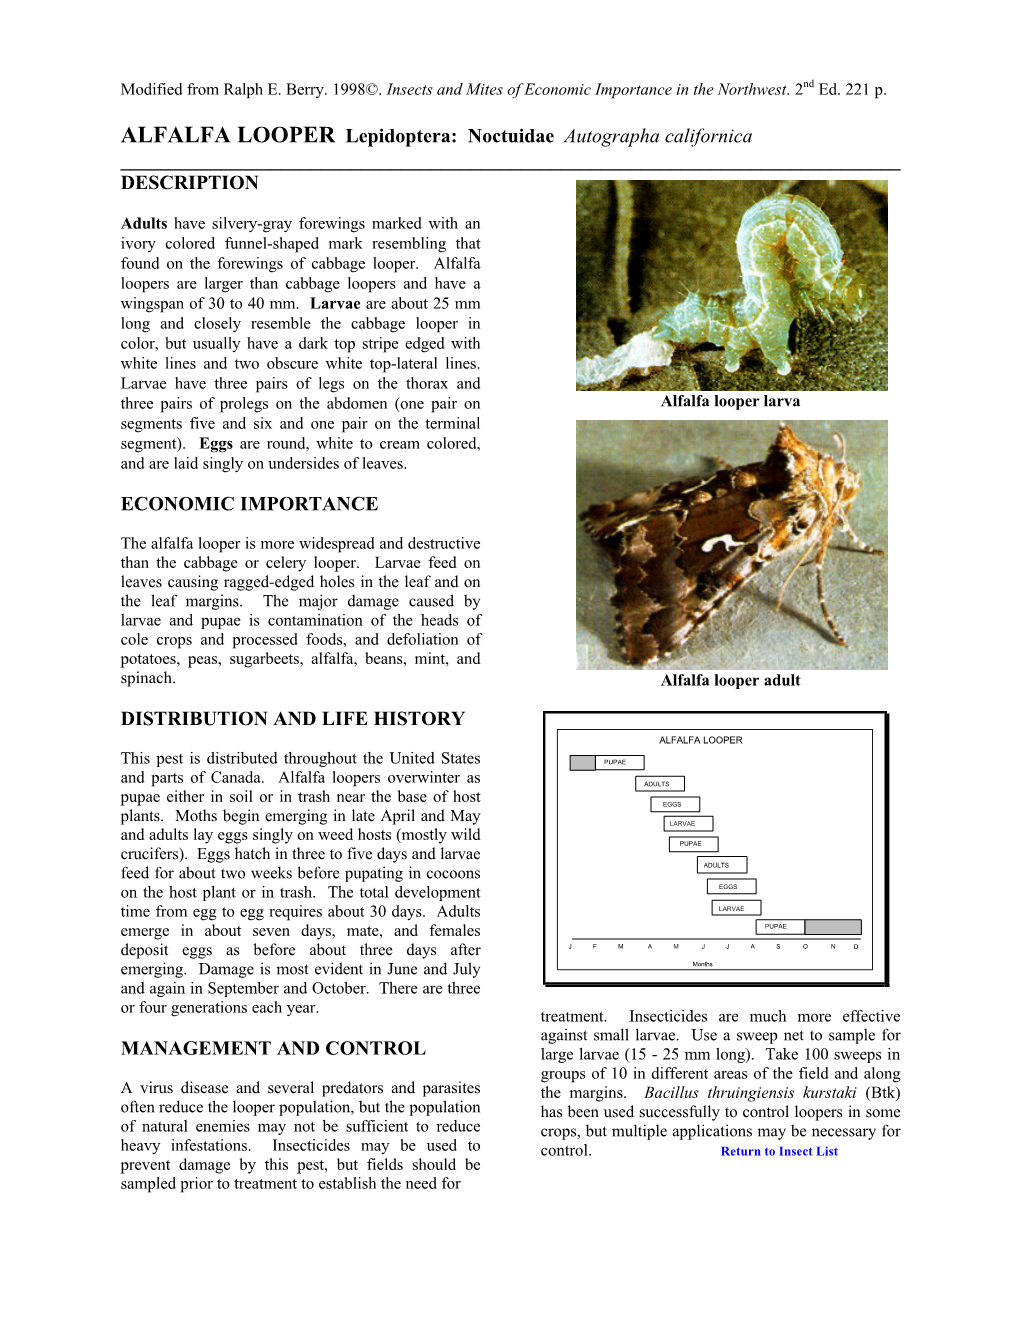 ALFALFA LOOPER Lepidoptera: Noctuidae Autographa Californica ______DESCRIPTION